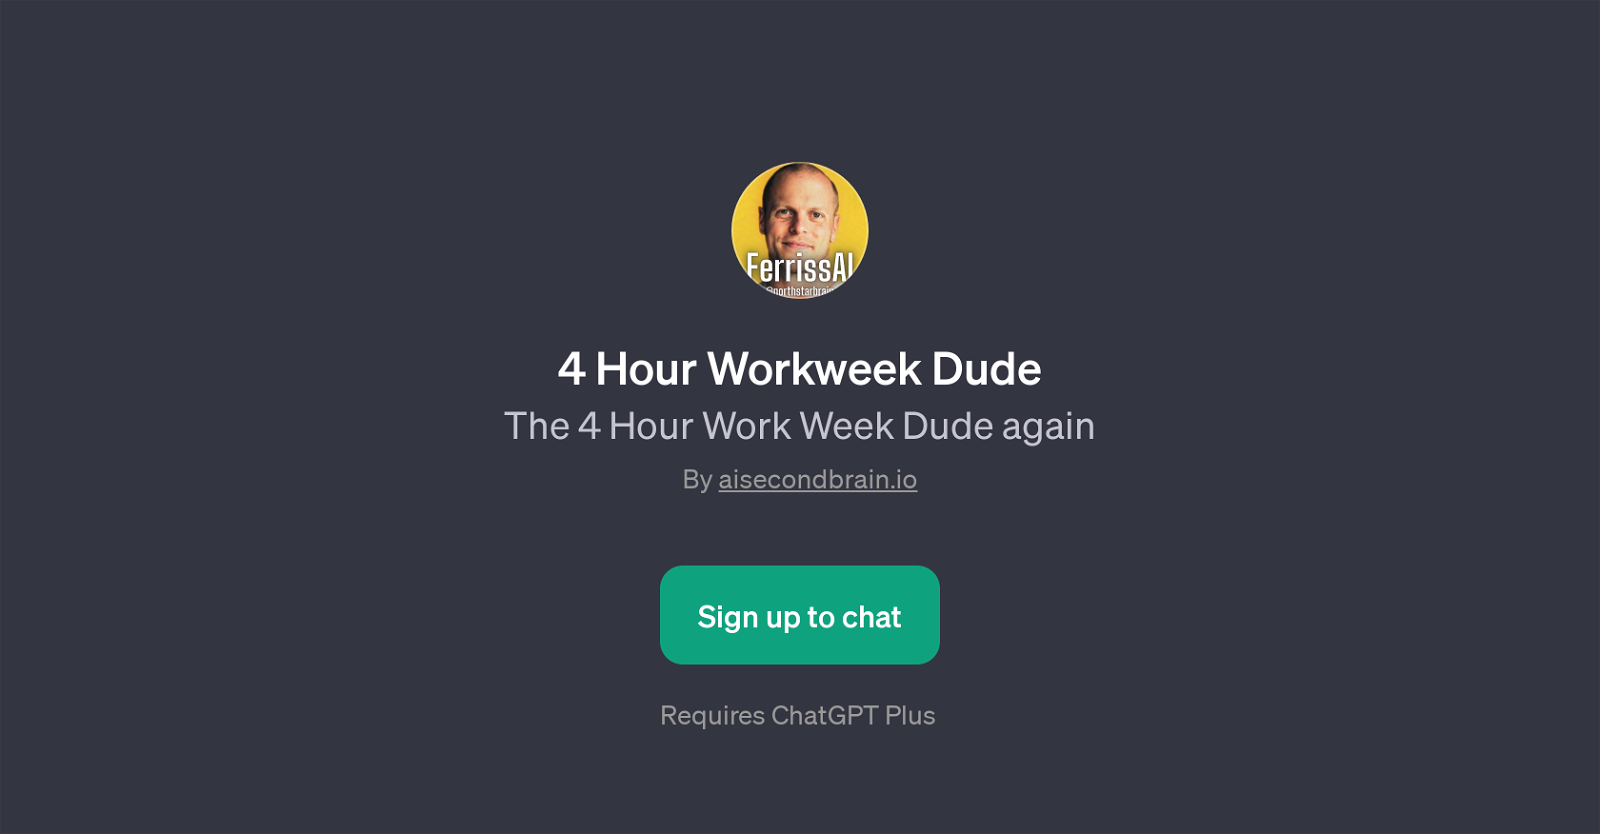 4 Hour Workweek Dude website